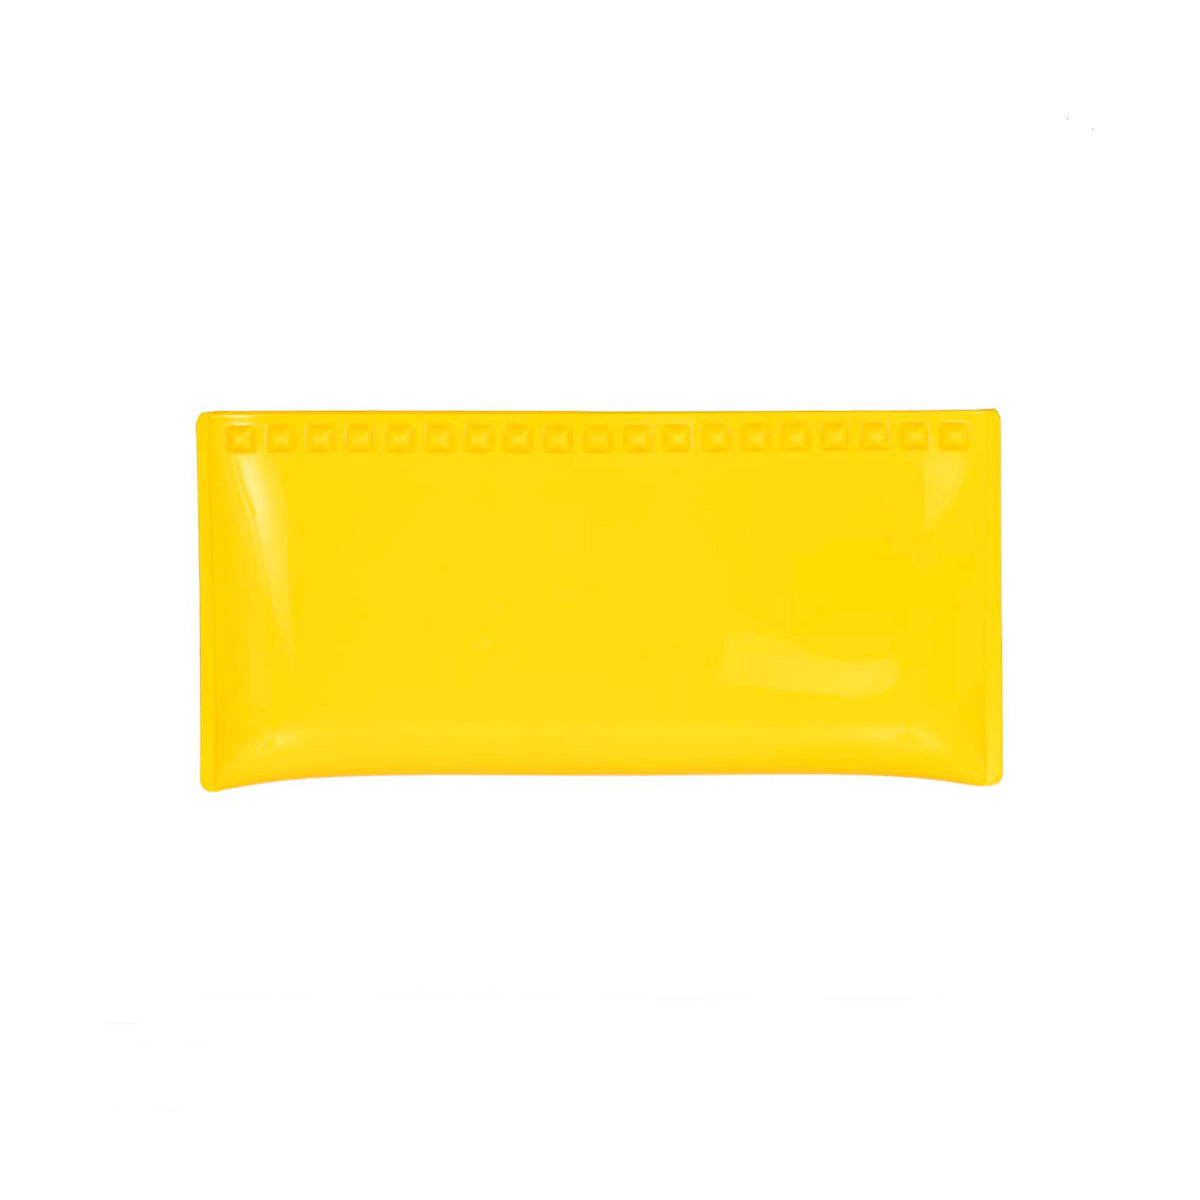 Studded yellow Julian rubber purse from Carmen Sol